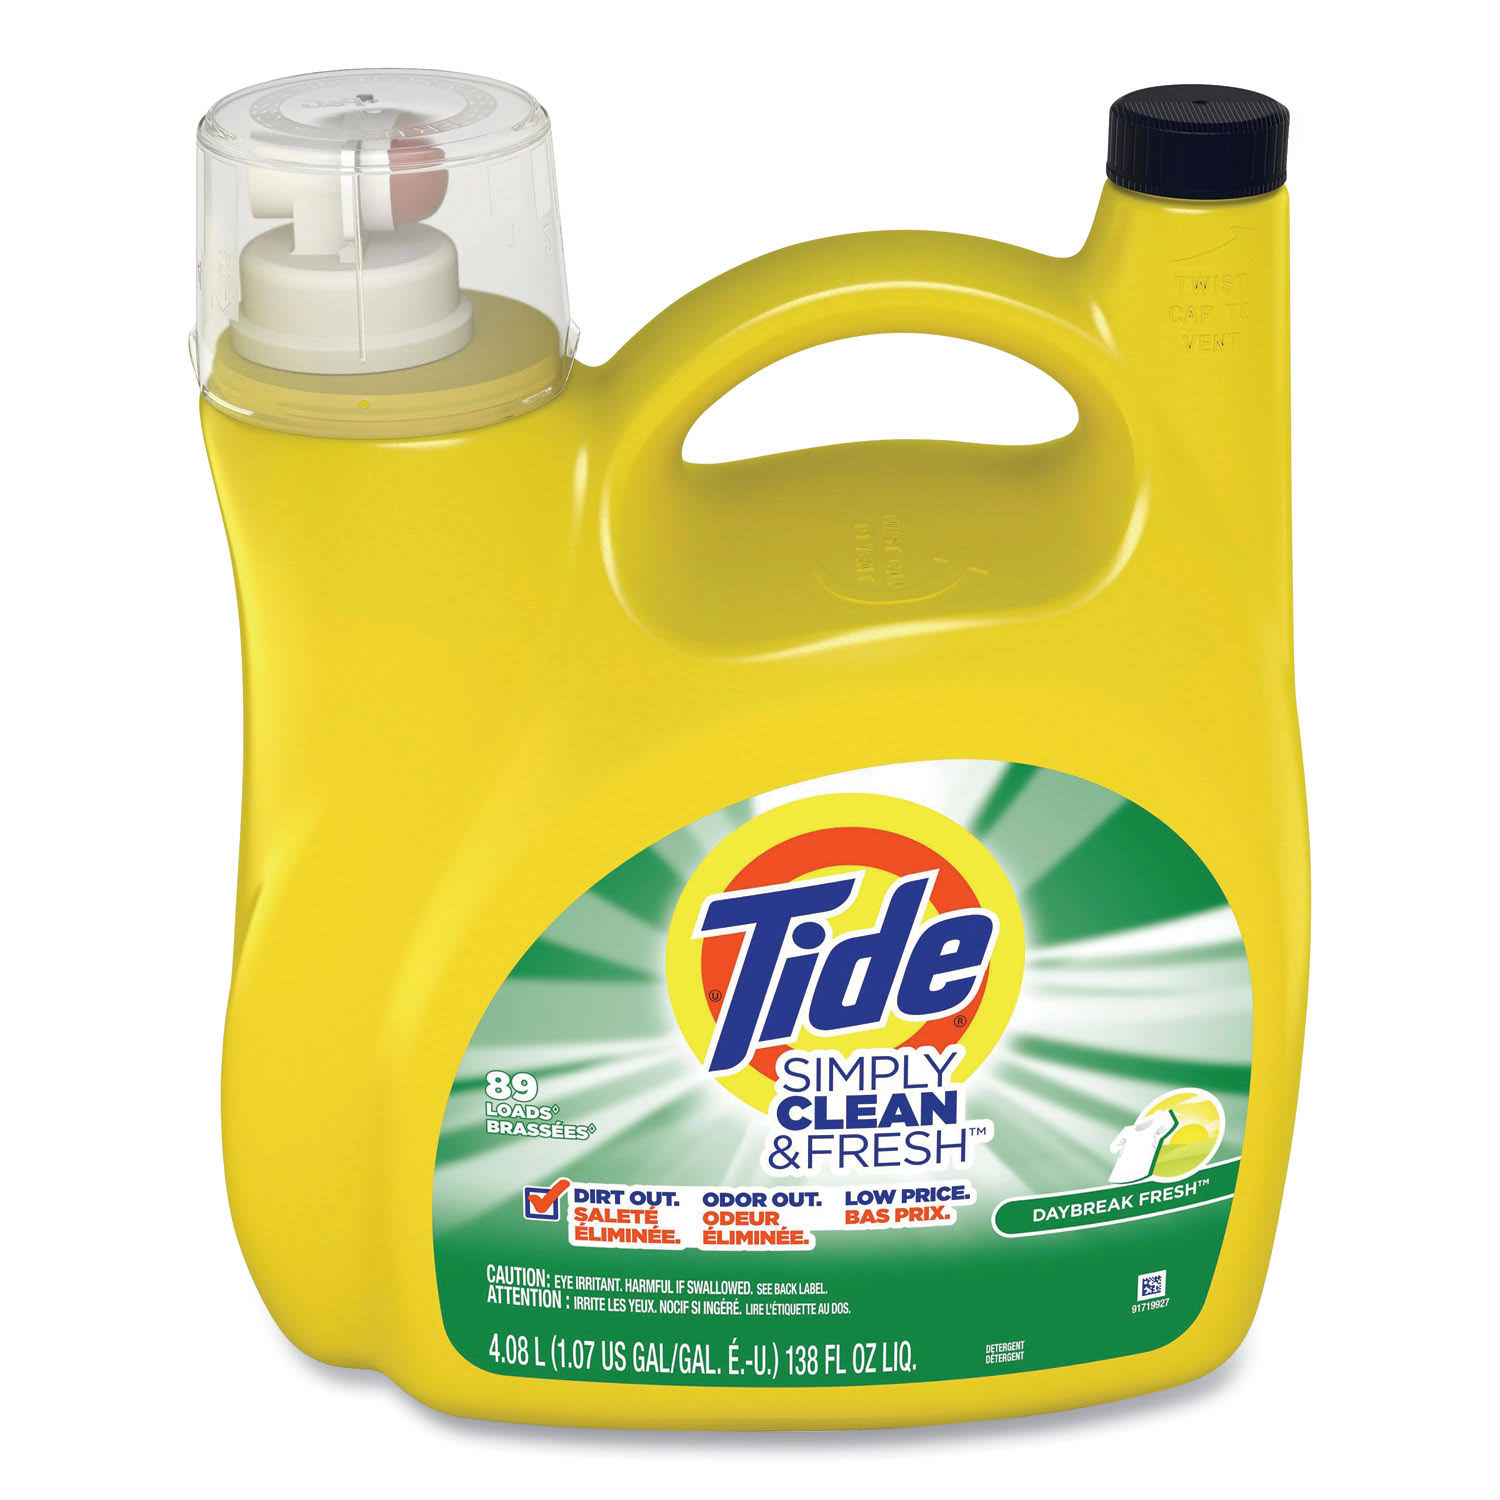 Tide Simply Clean & Fresh Liquid Laundry Detergent, Daybreak Fresh